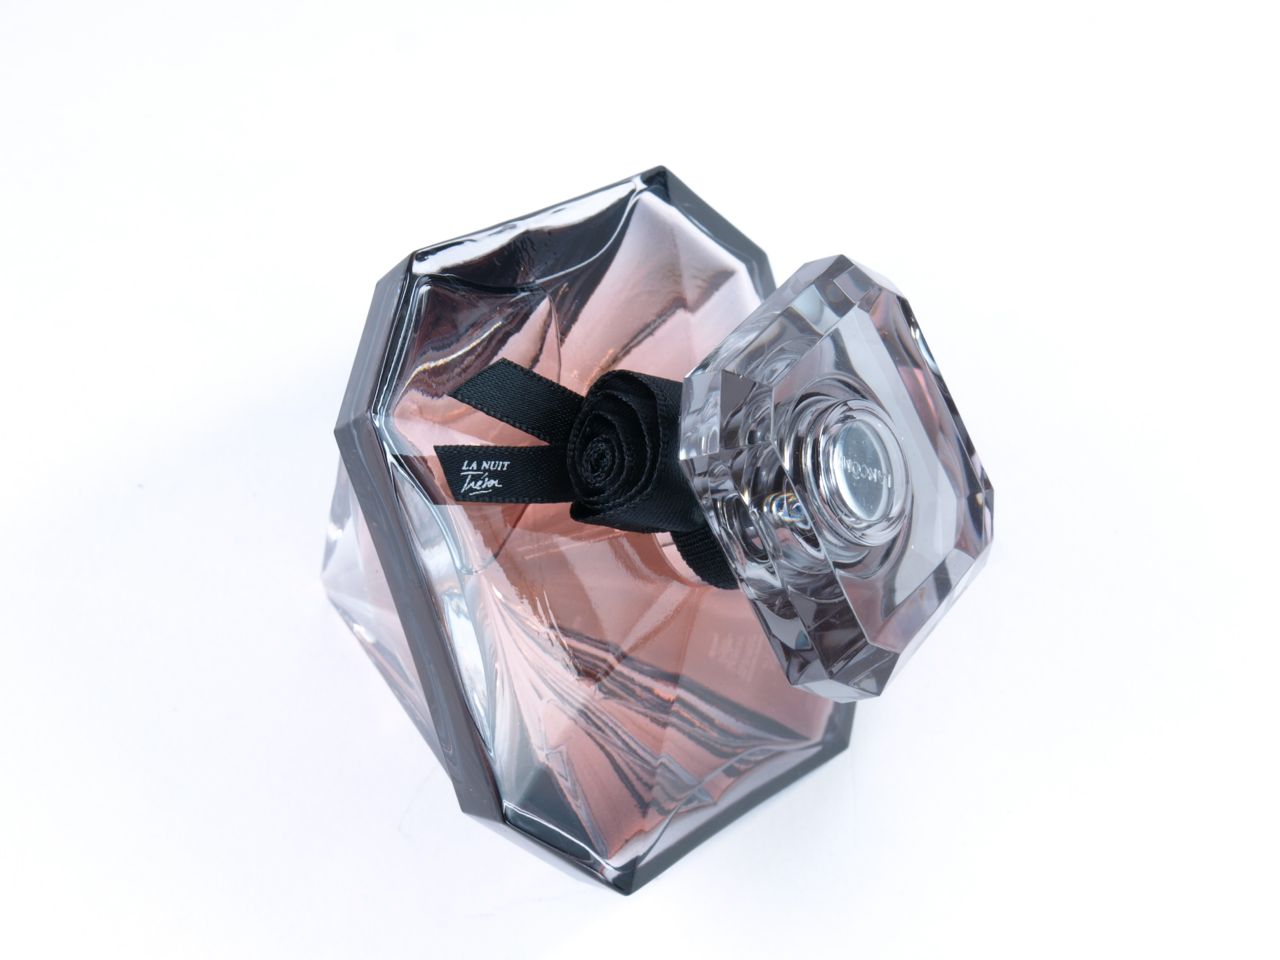 lancome perfume diamond bottle